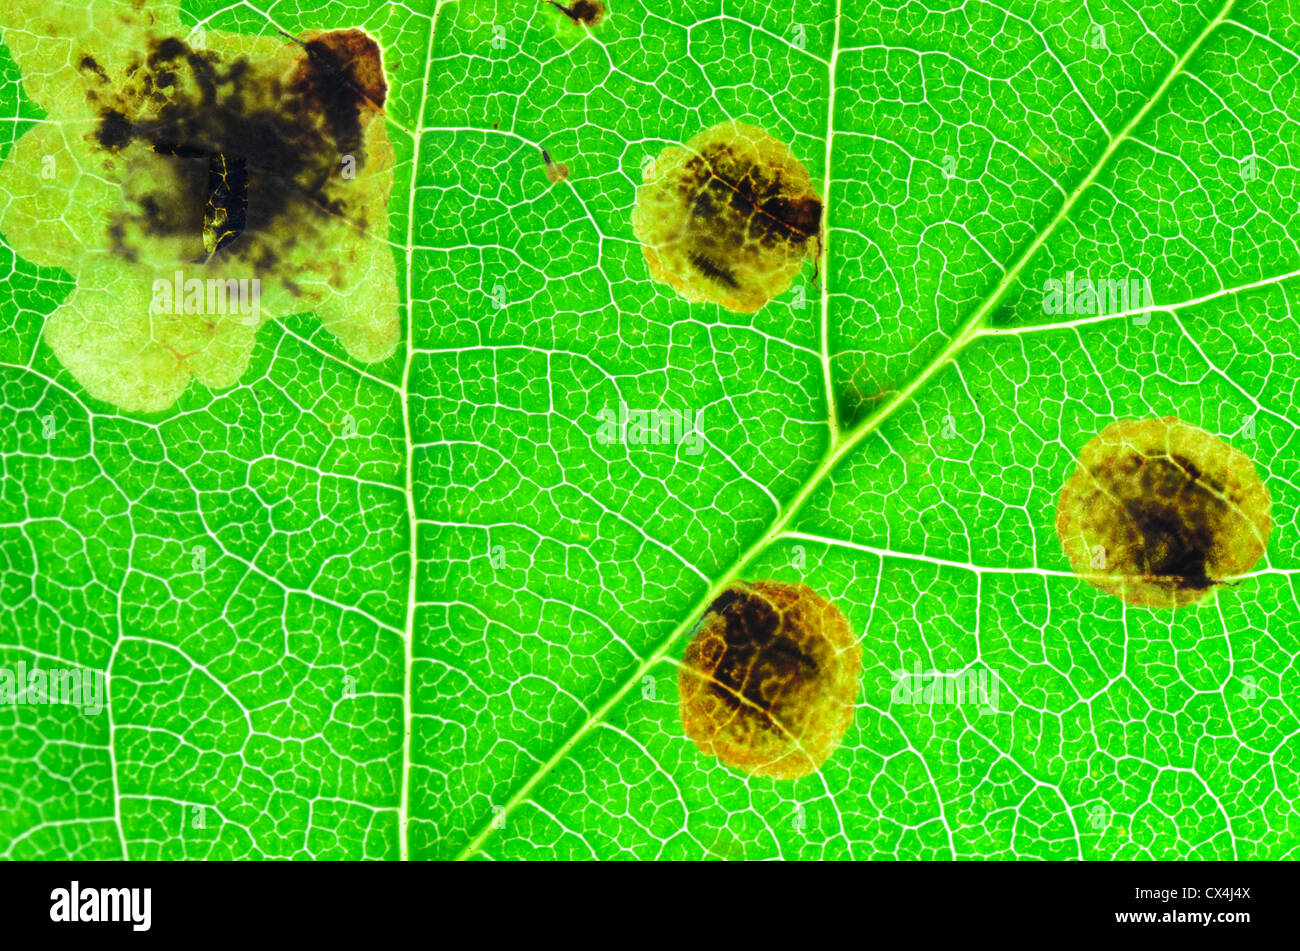 Horse-chestnut Leaf Miner Moth (Cameraria ohridella), larvae stage causing damage to tree, Abbots Leigh, United Kingdom, Europe Stock Photo